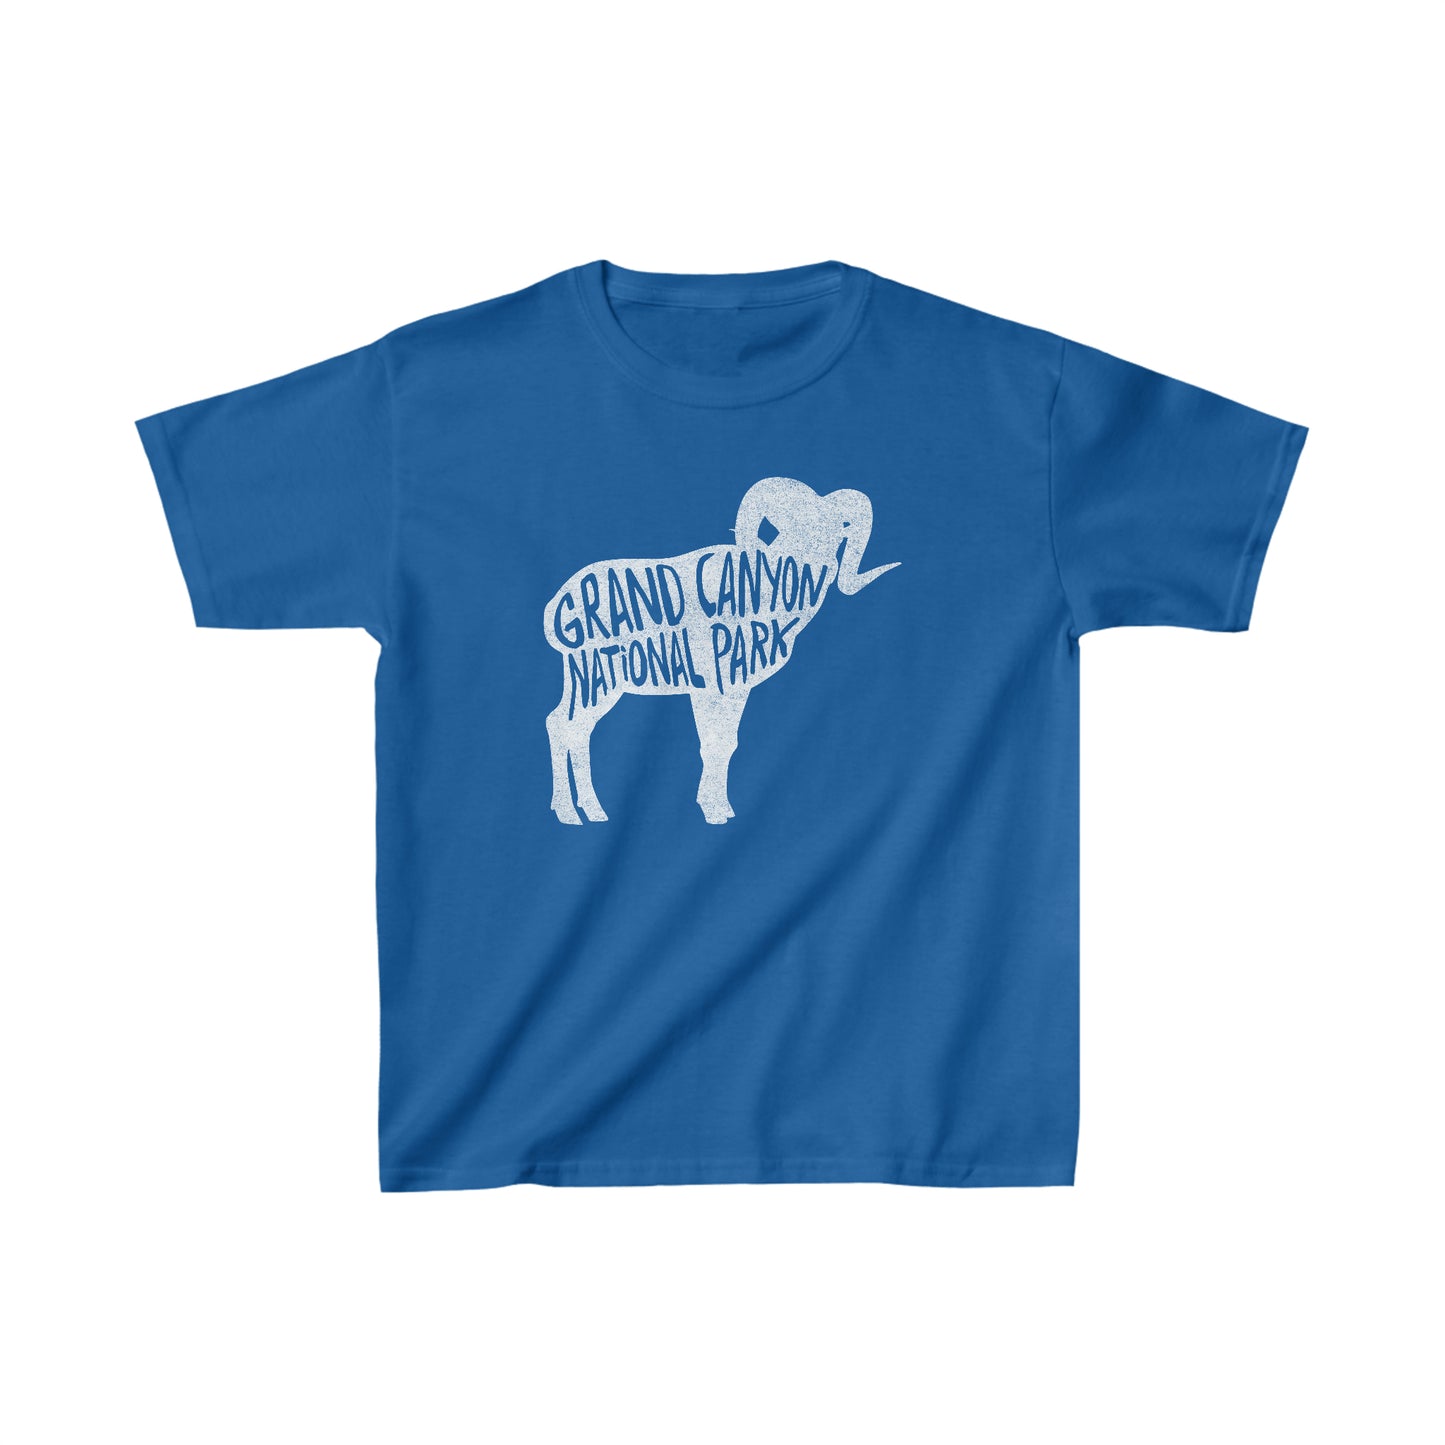 Grand Canyon National Park Child T-Shirt - Bighorn Sheep Chunky Text